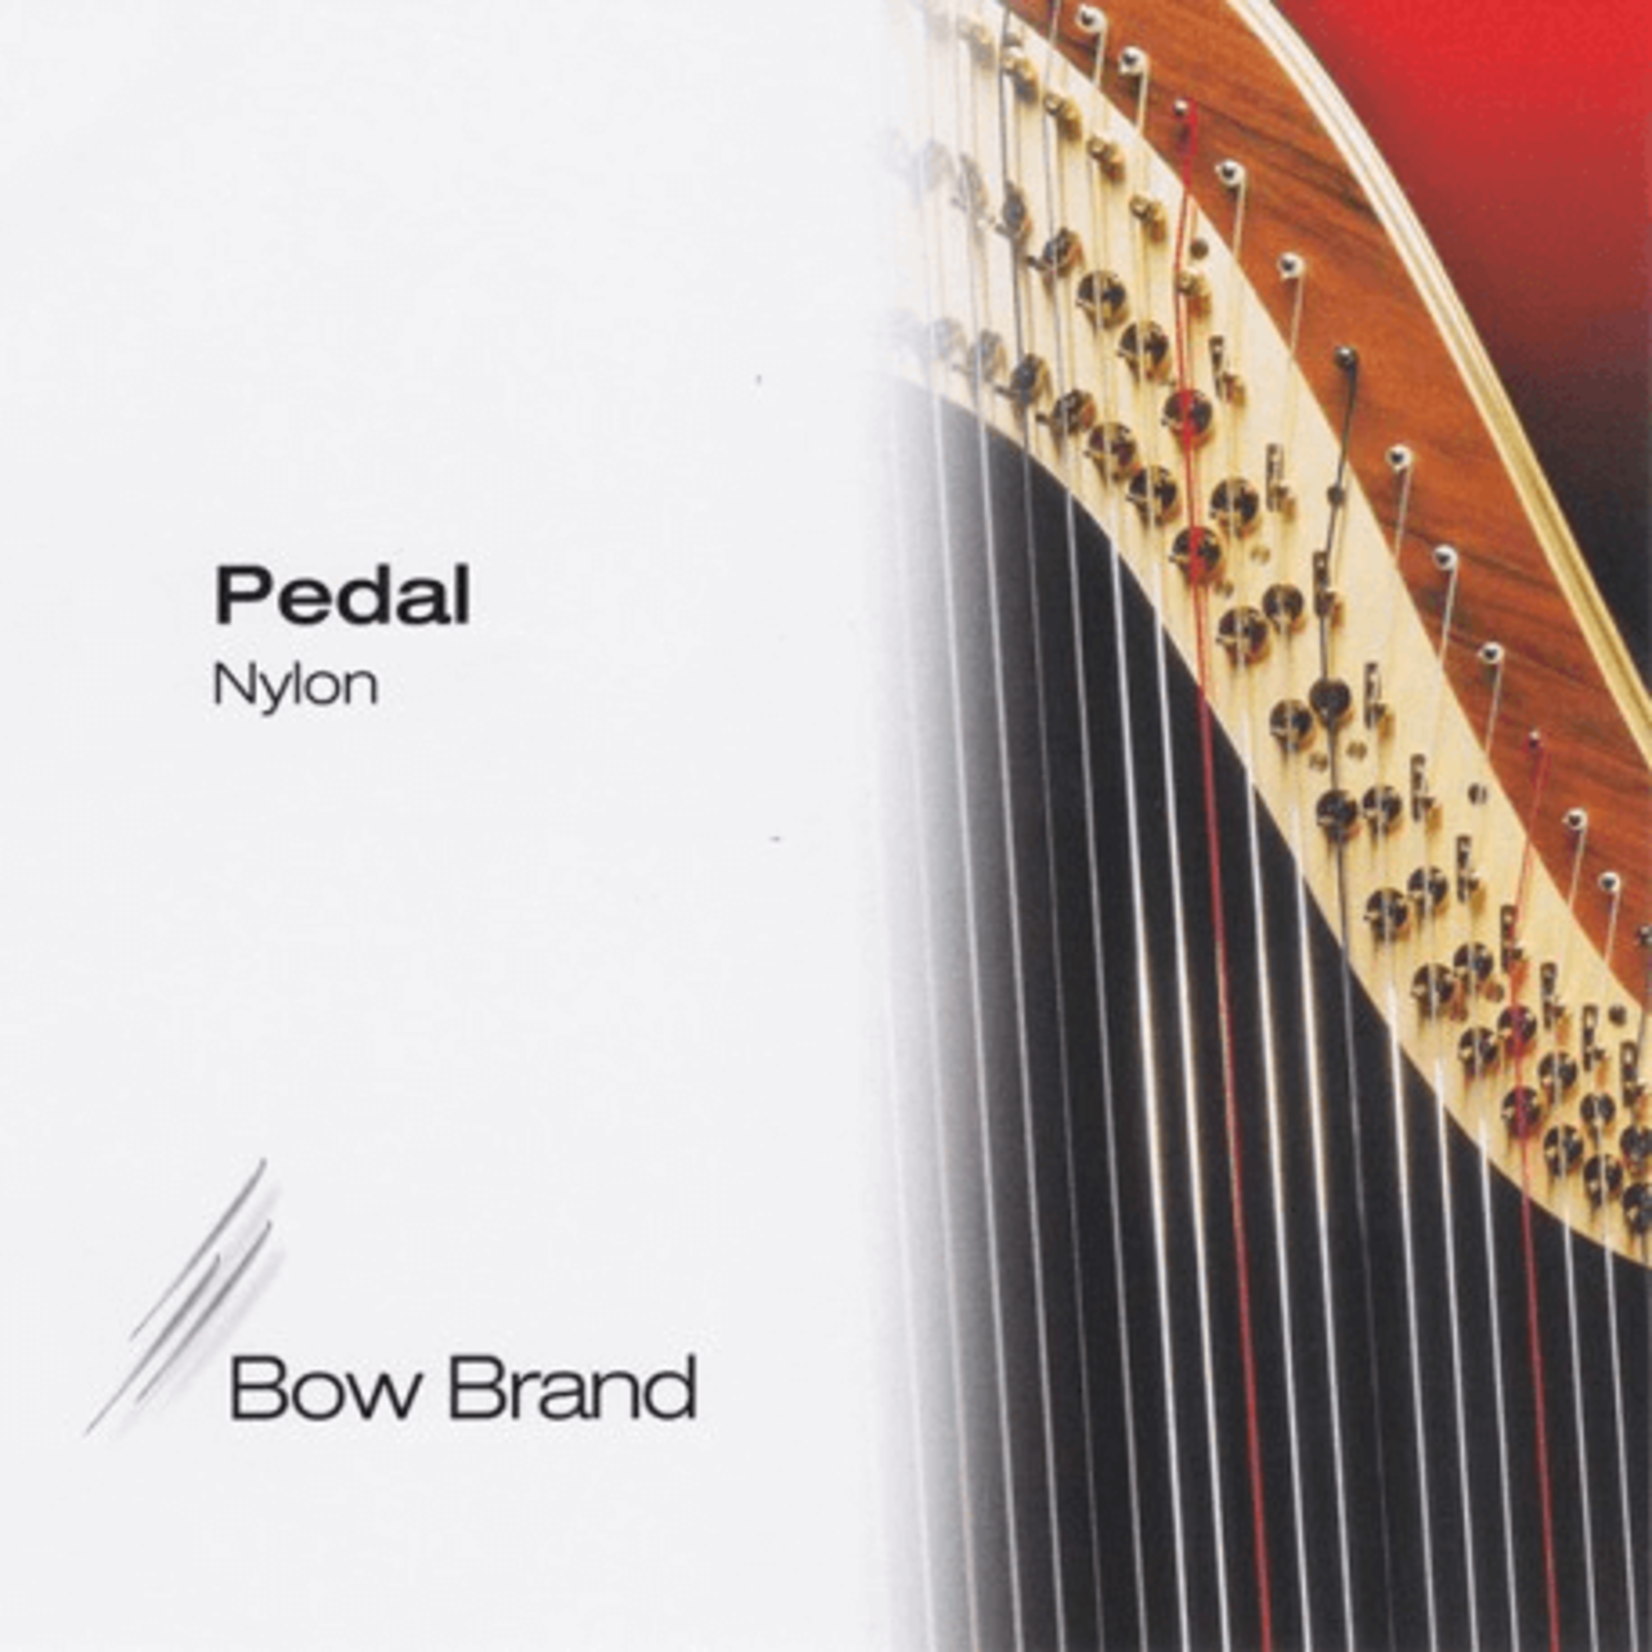 Bow Brand BOW BRAND  pedaal nylon - pedal NYLON 02/1 re